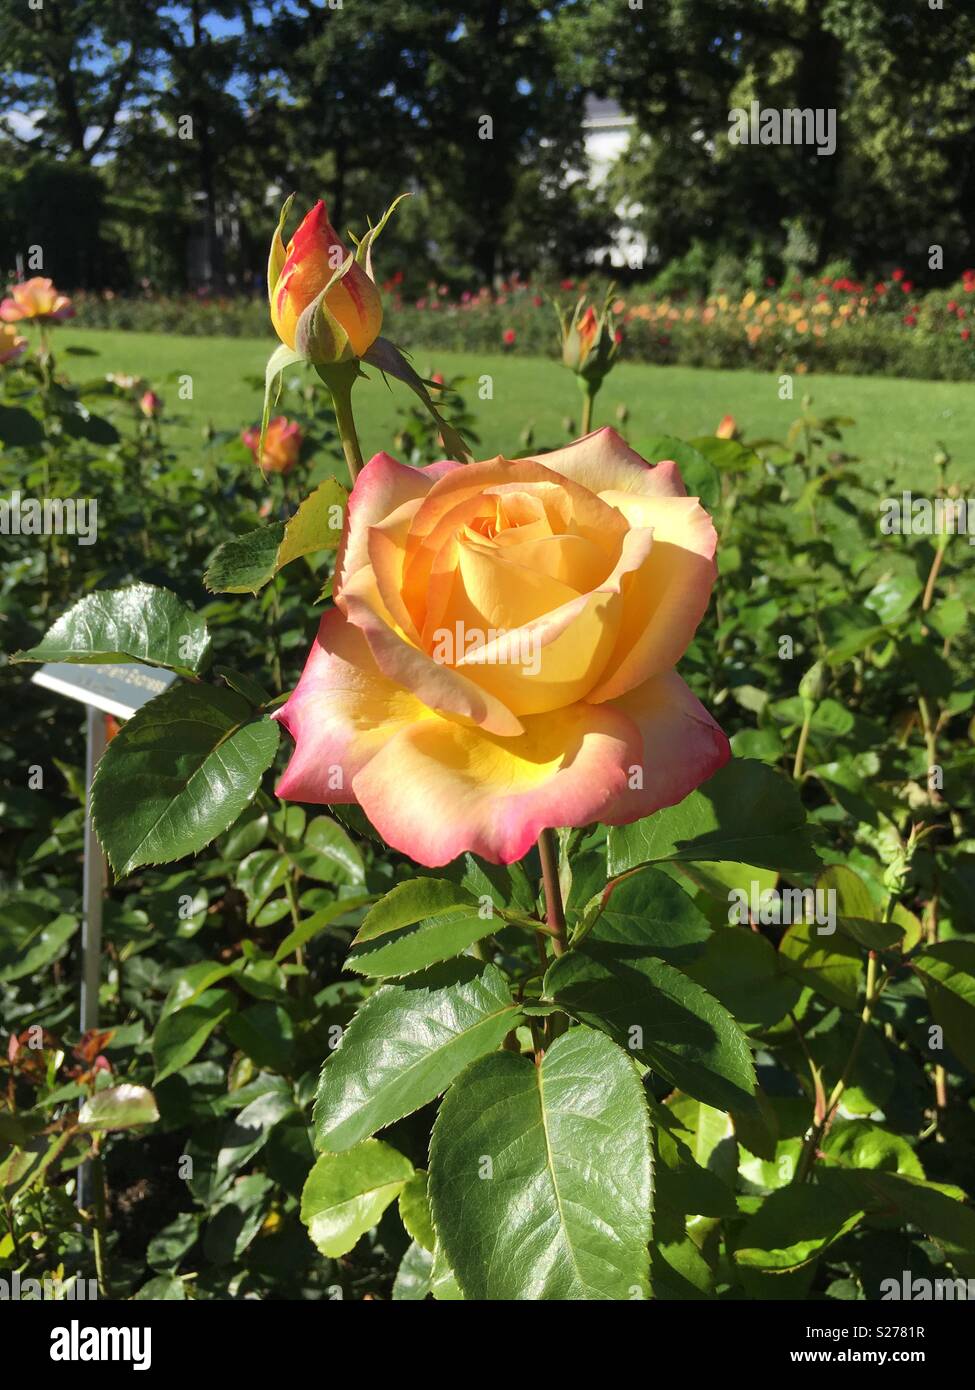 A rose from Bern Rosengarten in Switzerland. Stock Photo